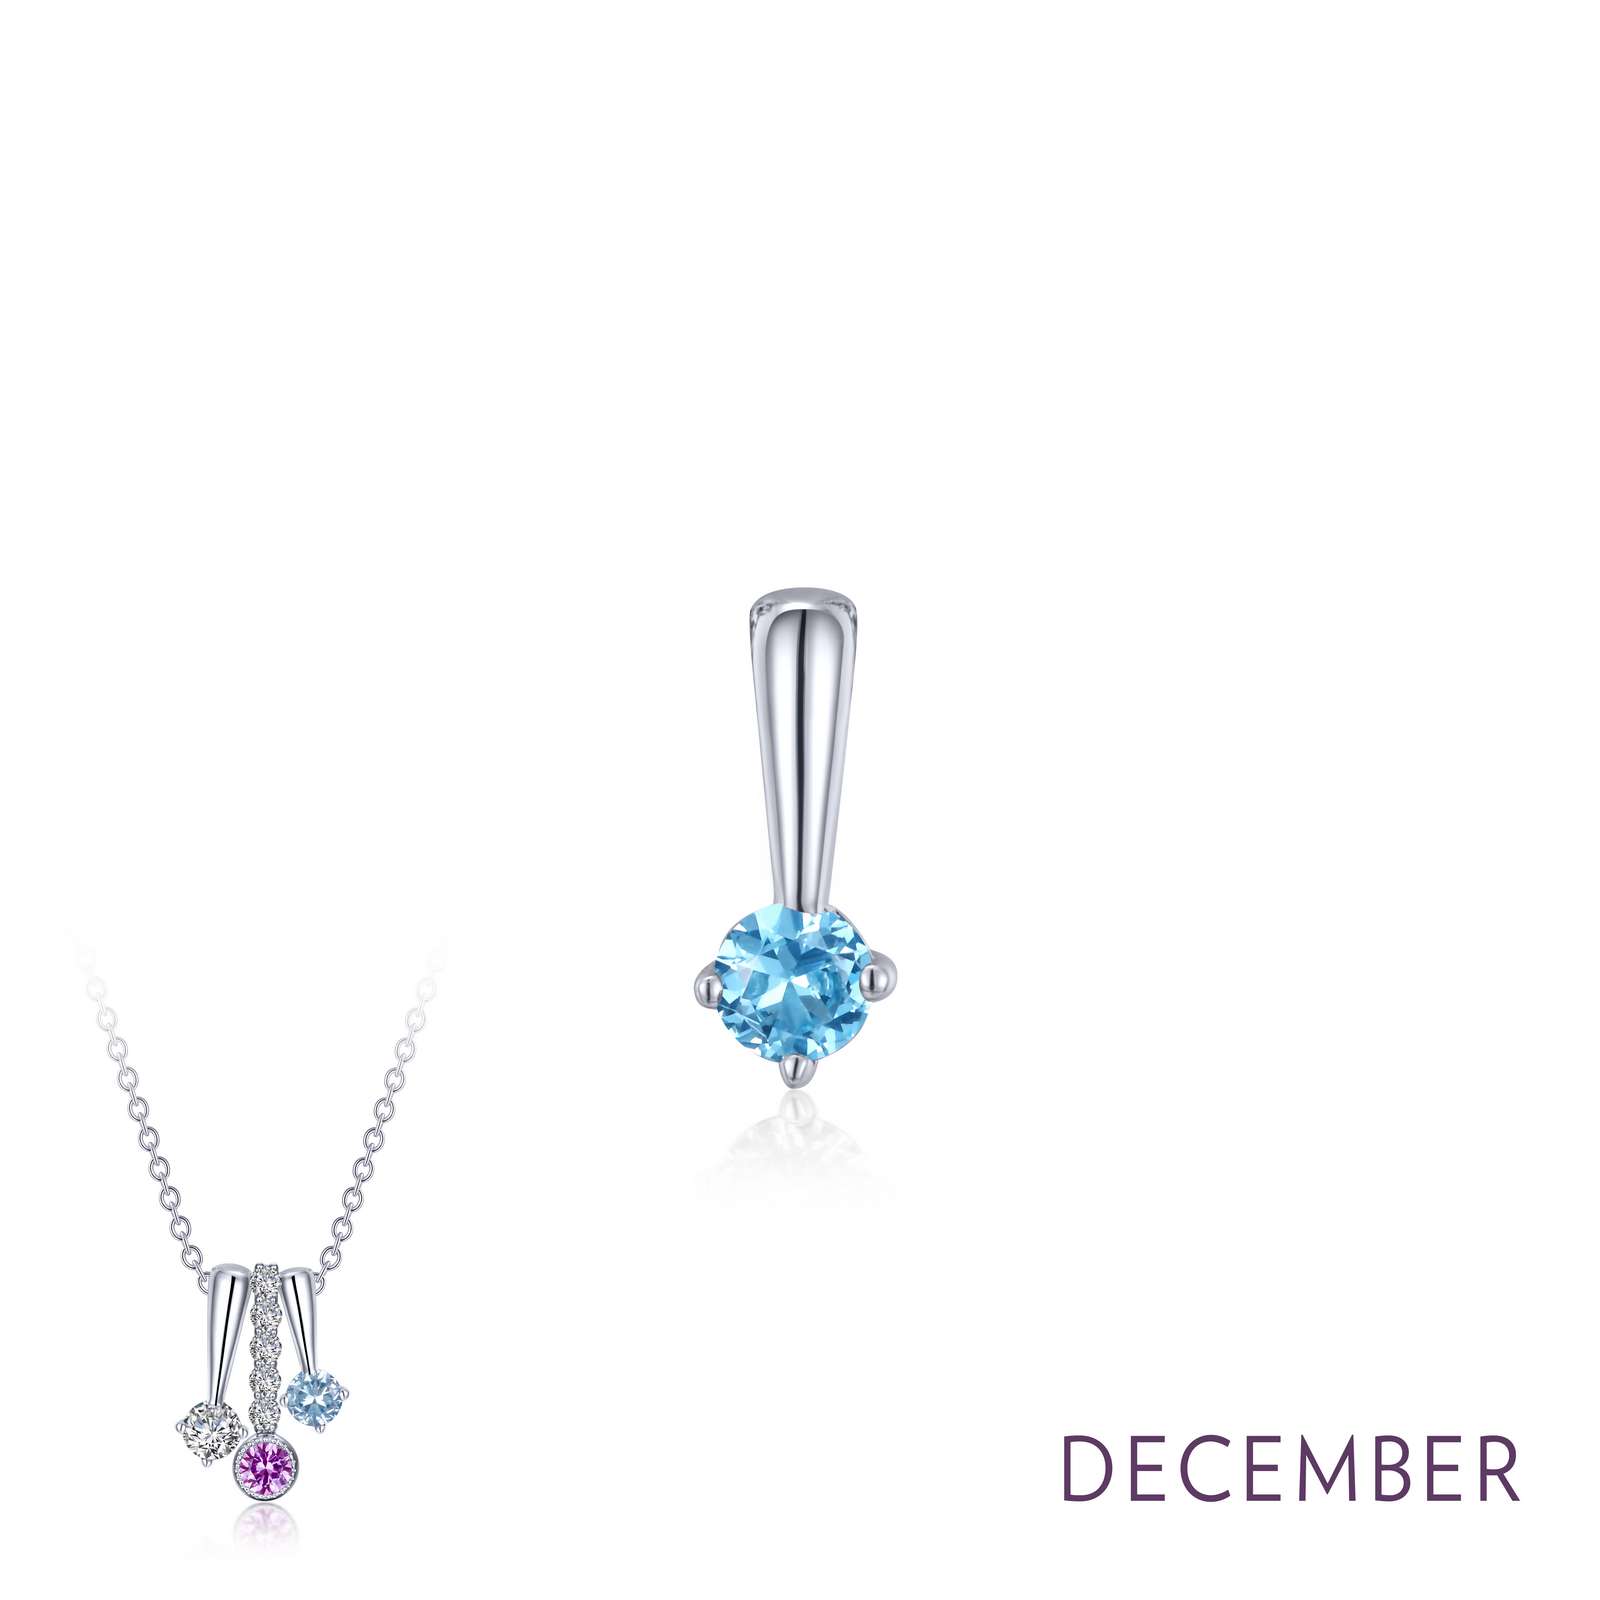 December Birthstone Love Pendant Griner Jewelry Co. Moultrie, GA